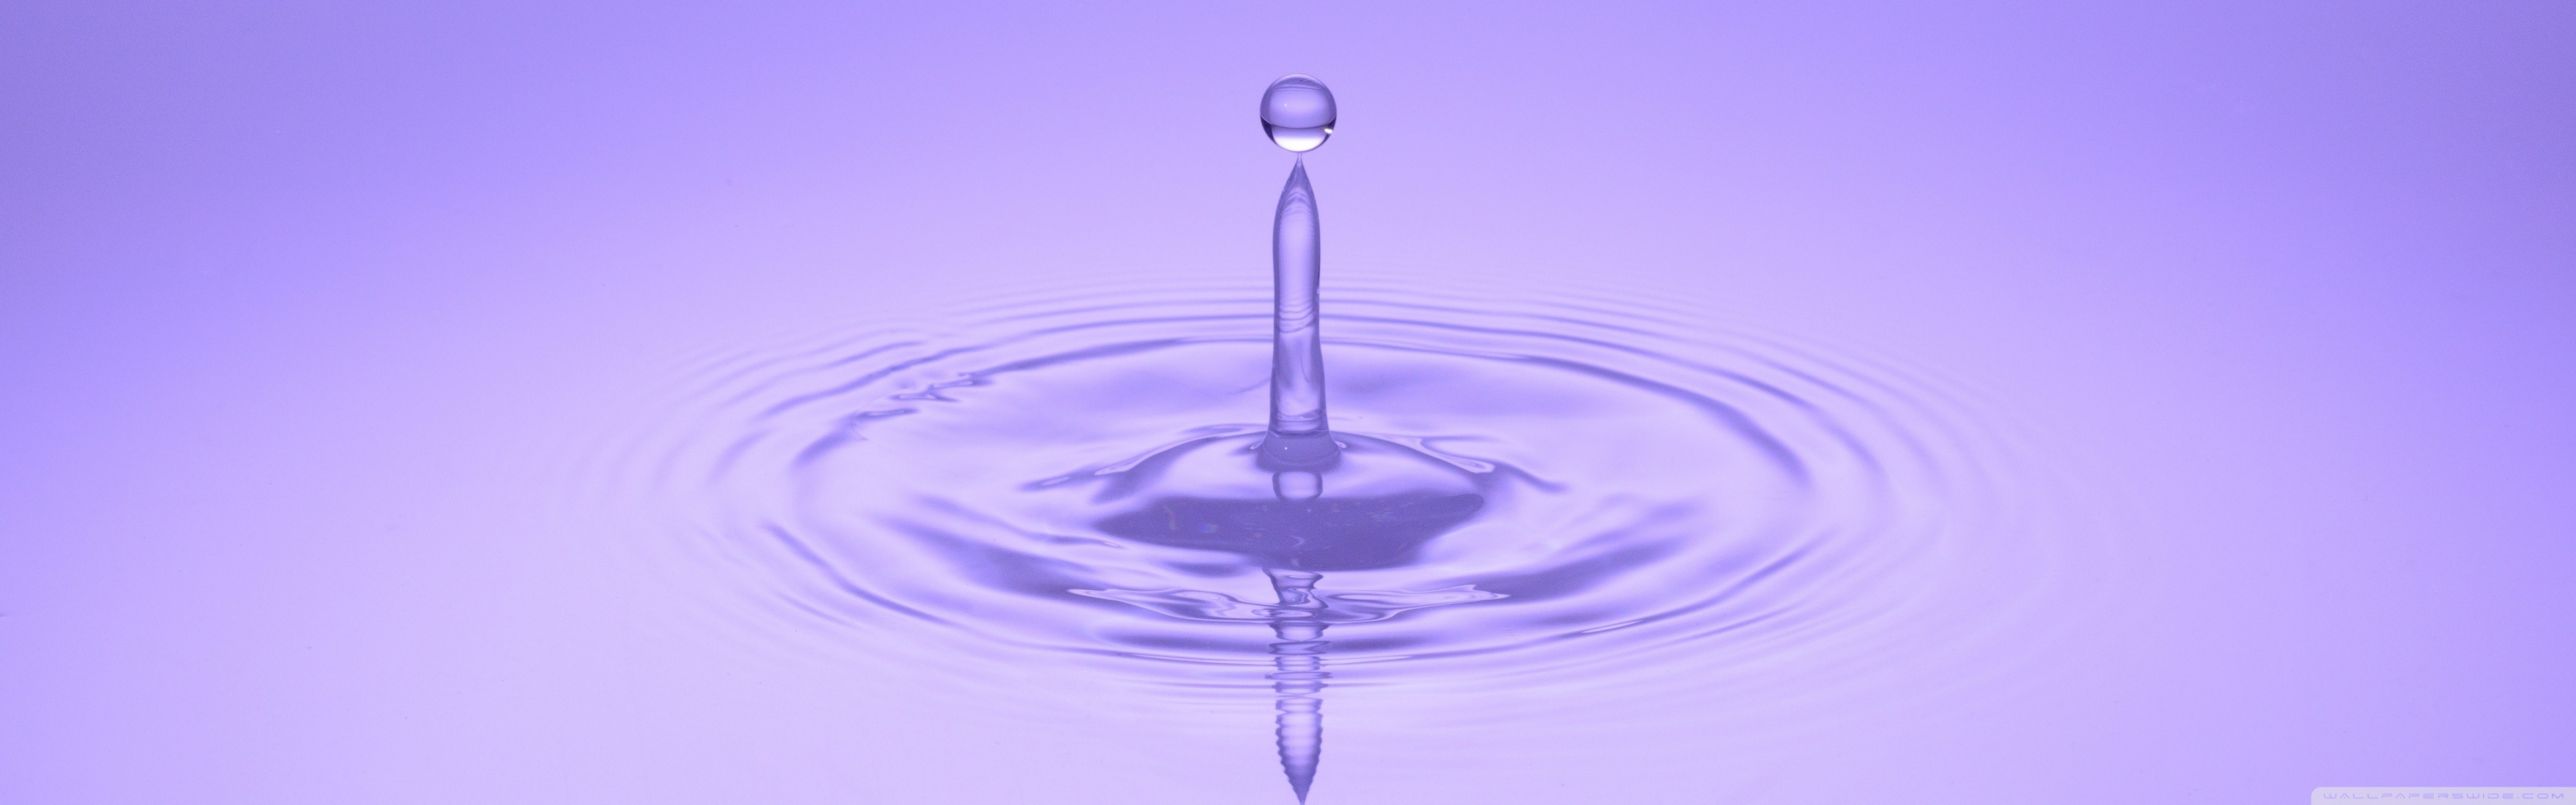 Water Droplet Reflection Ultra HD Desktop Background Wallpaper For